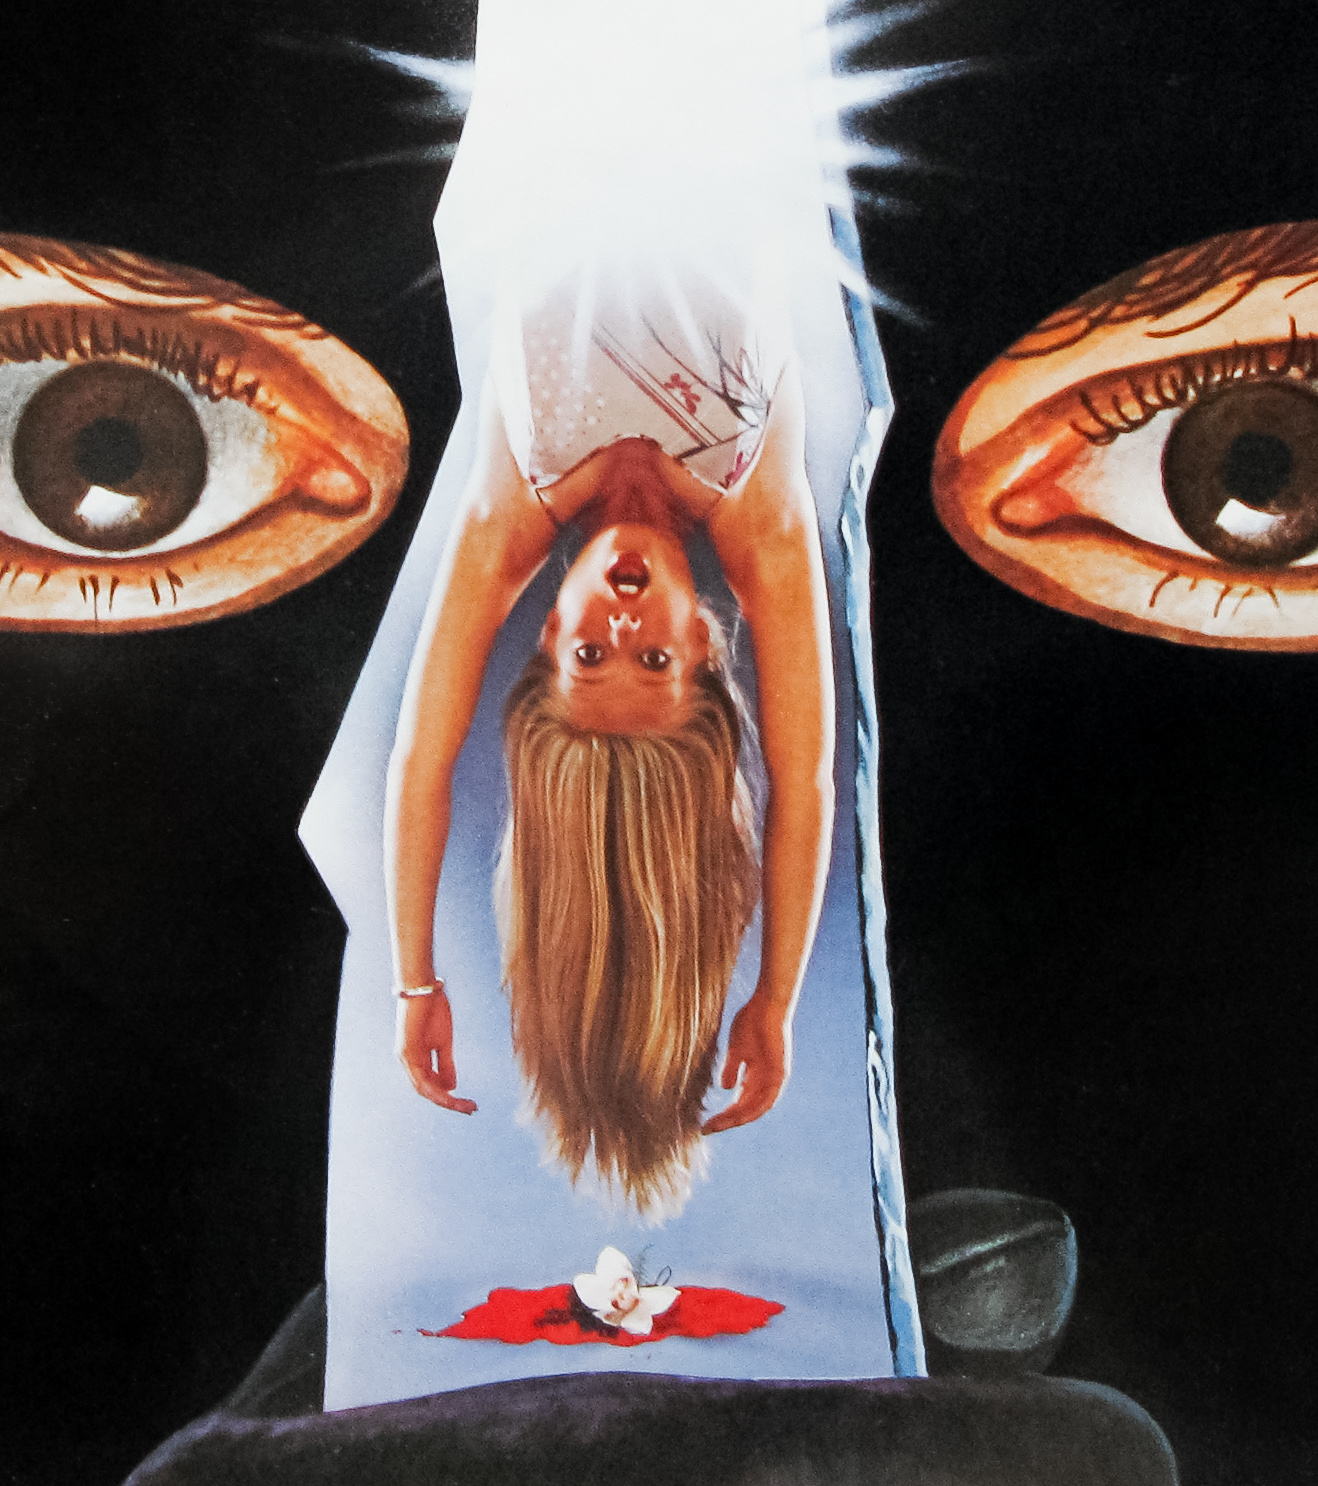 1980 PROM NIGHT Original U.S. One Sheet Movie Poster